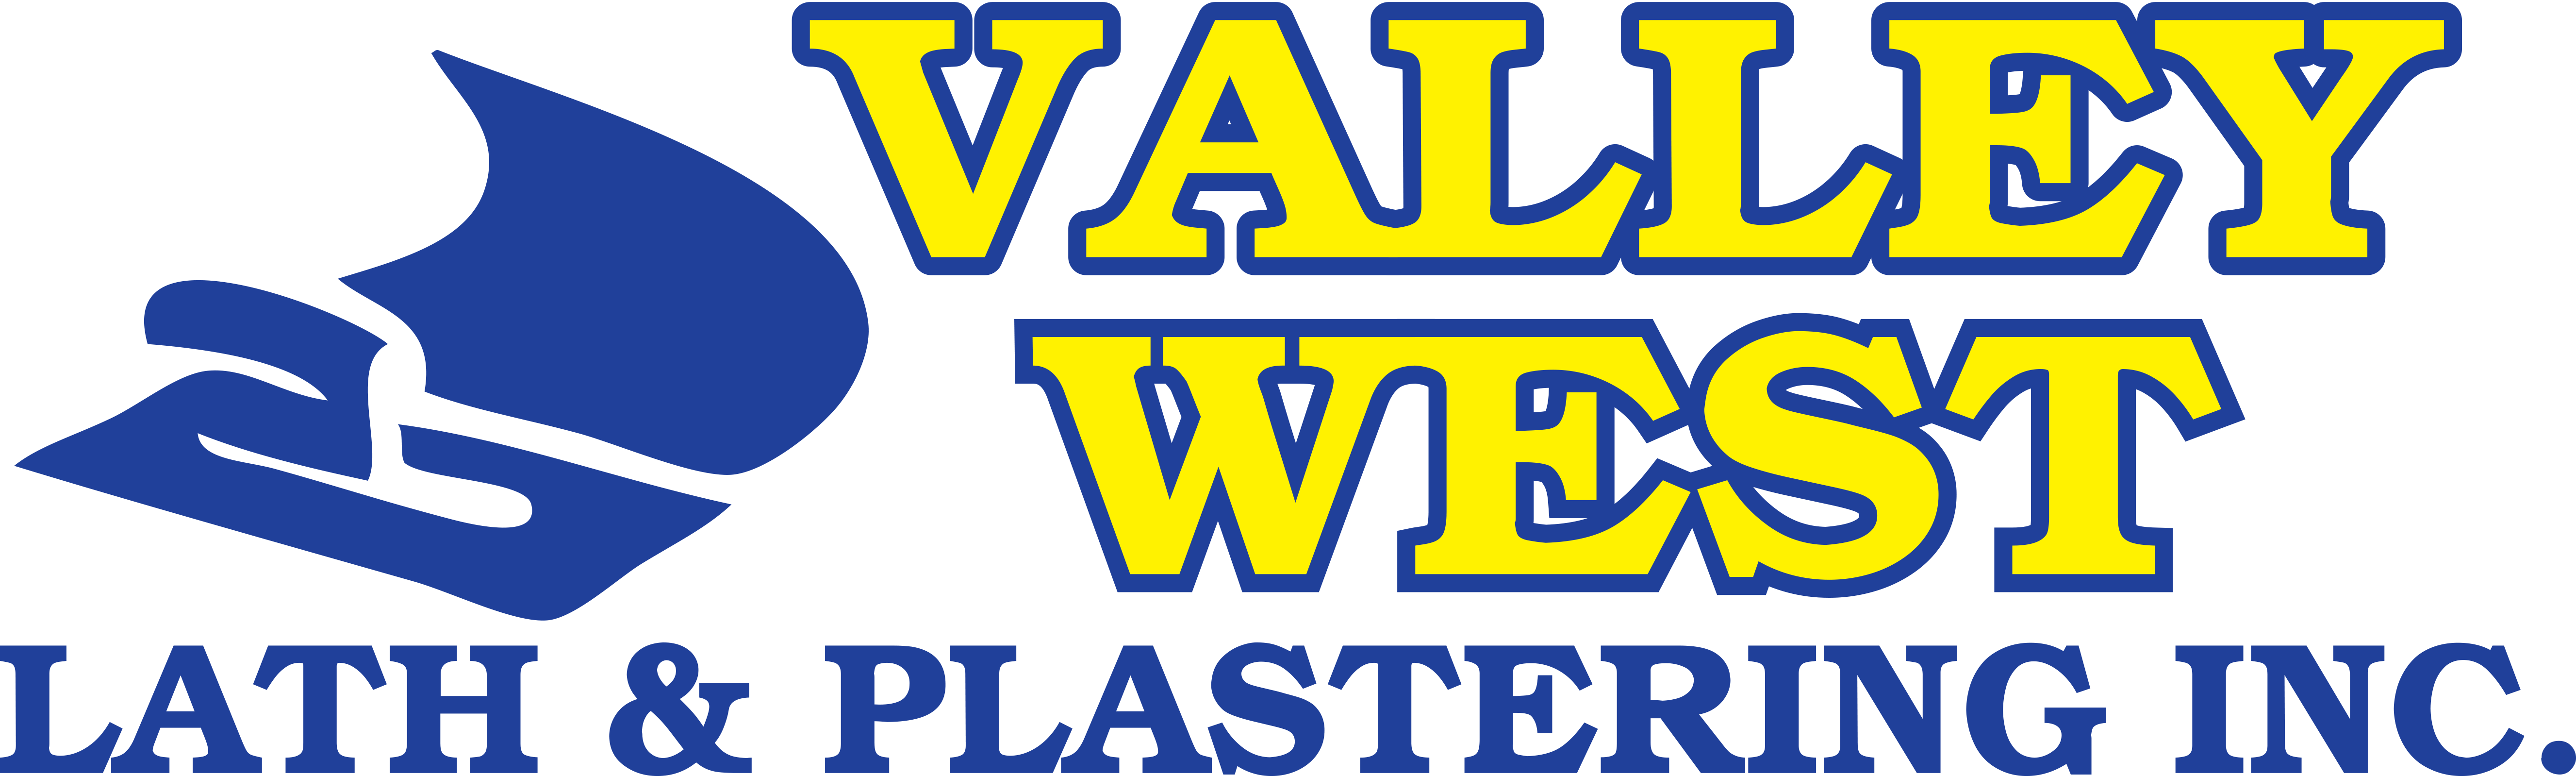 Valley West Lath & Plastering, Inc. Logo